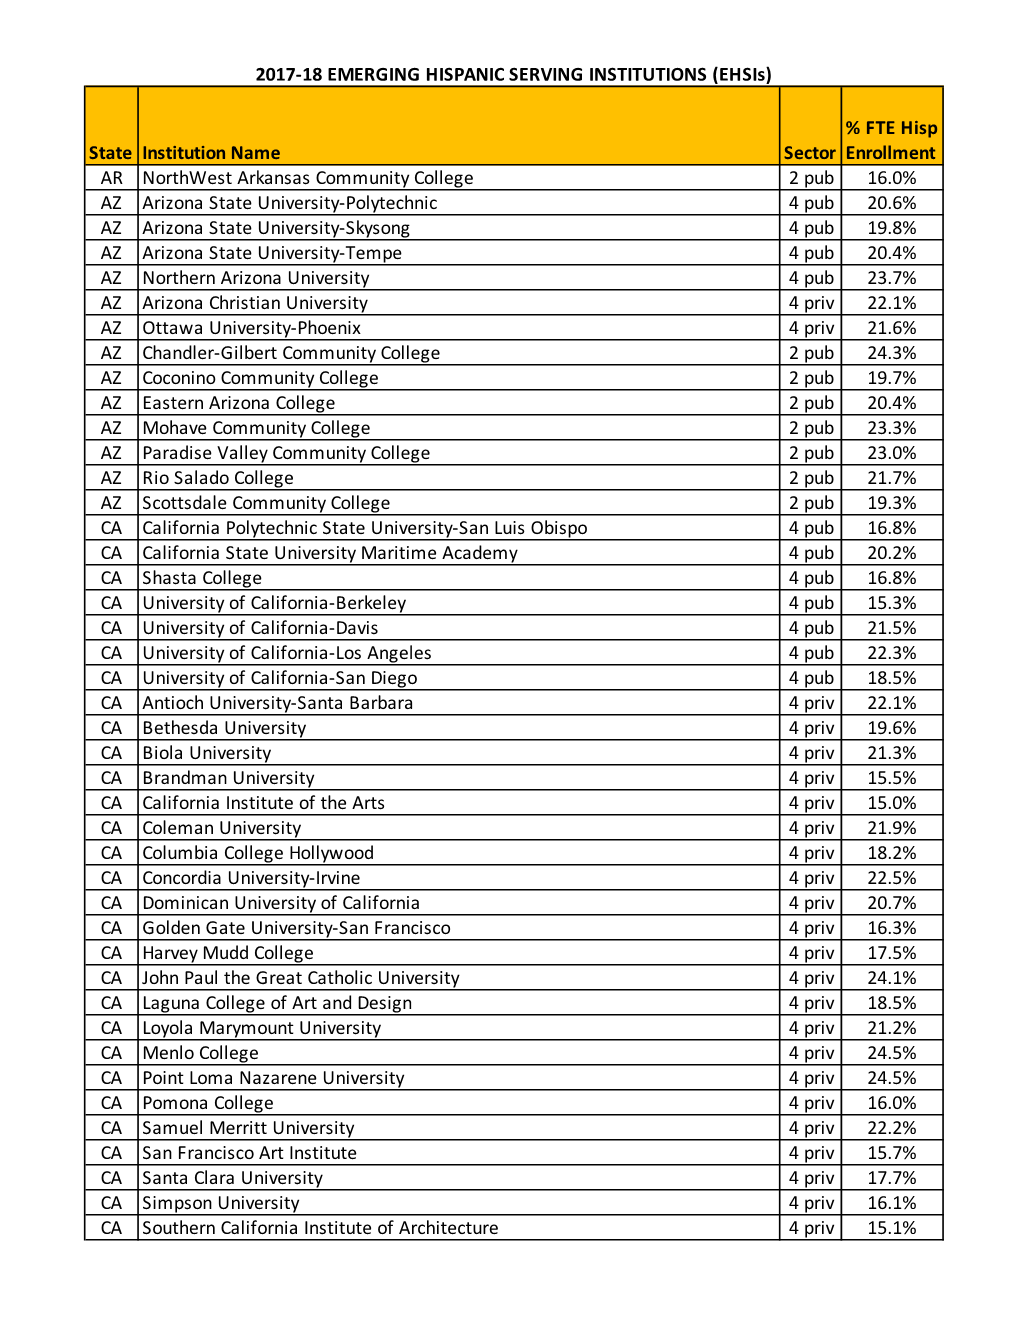 2017 HSI List